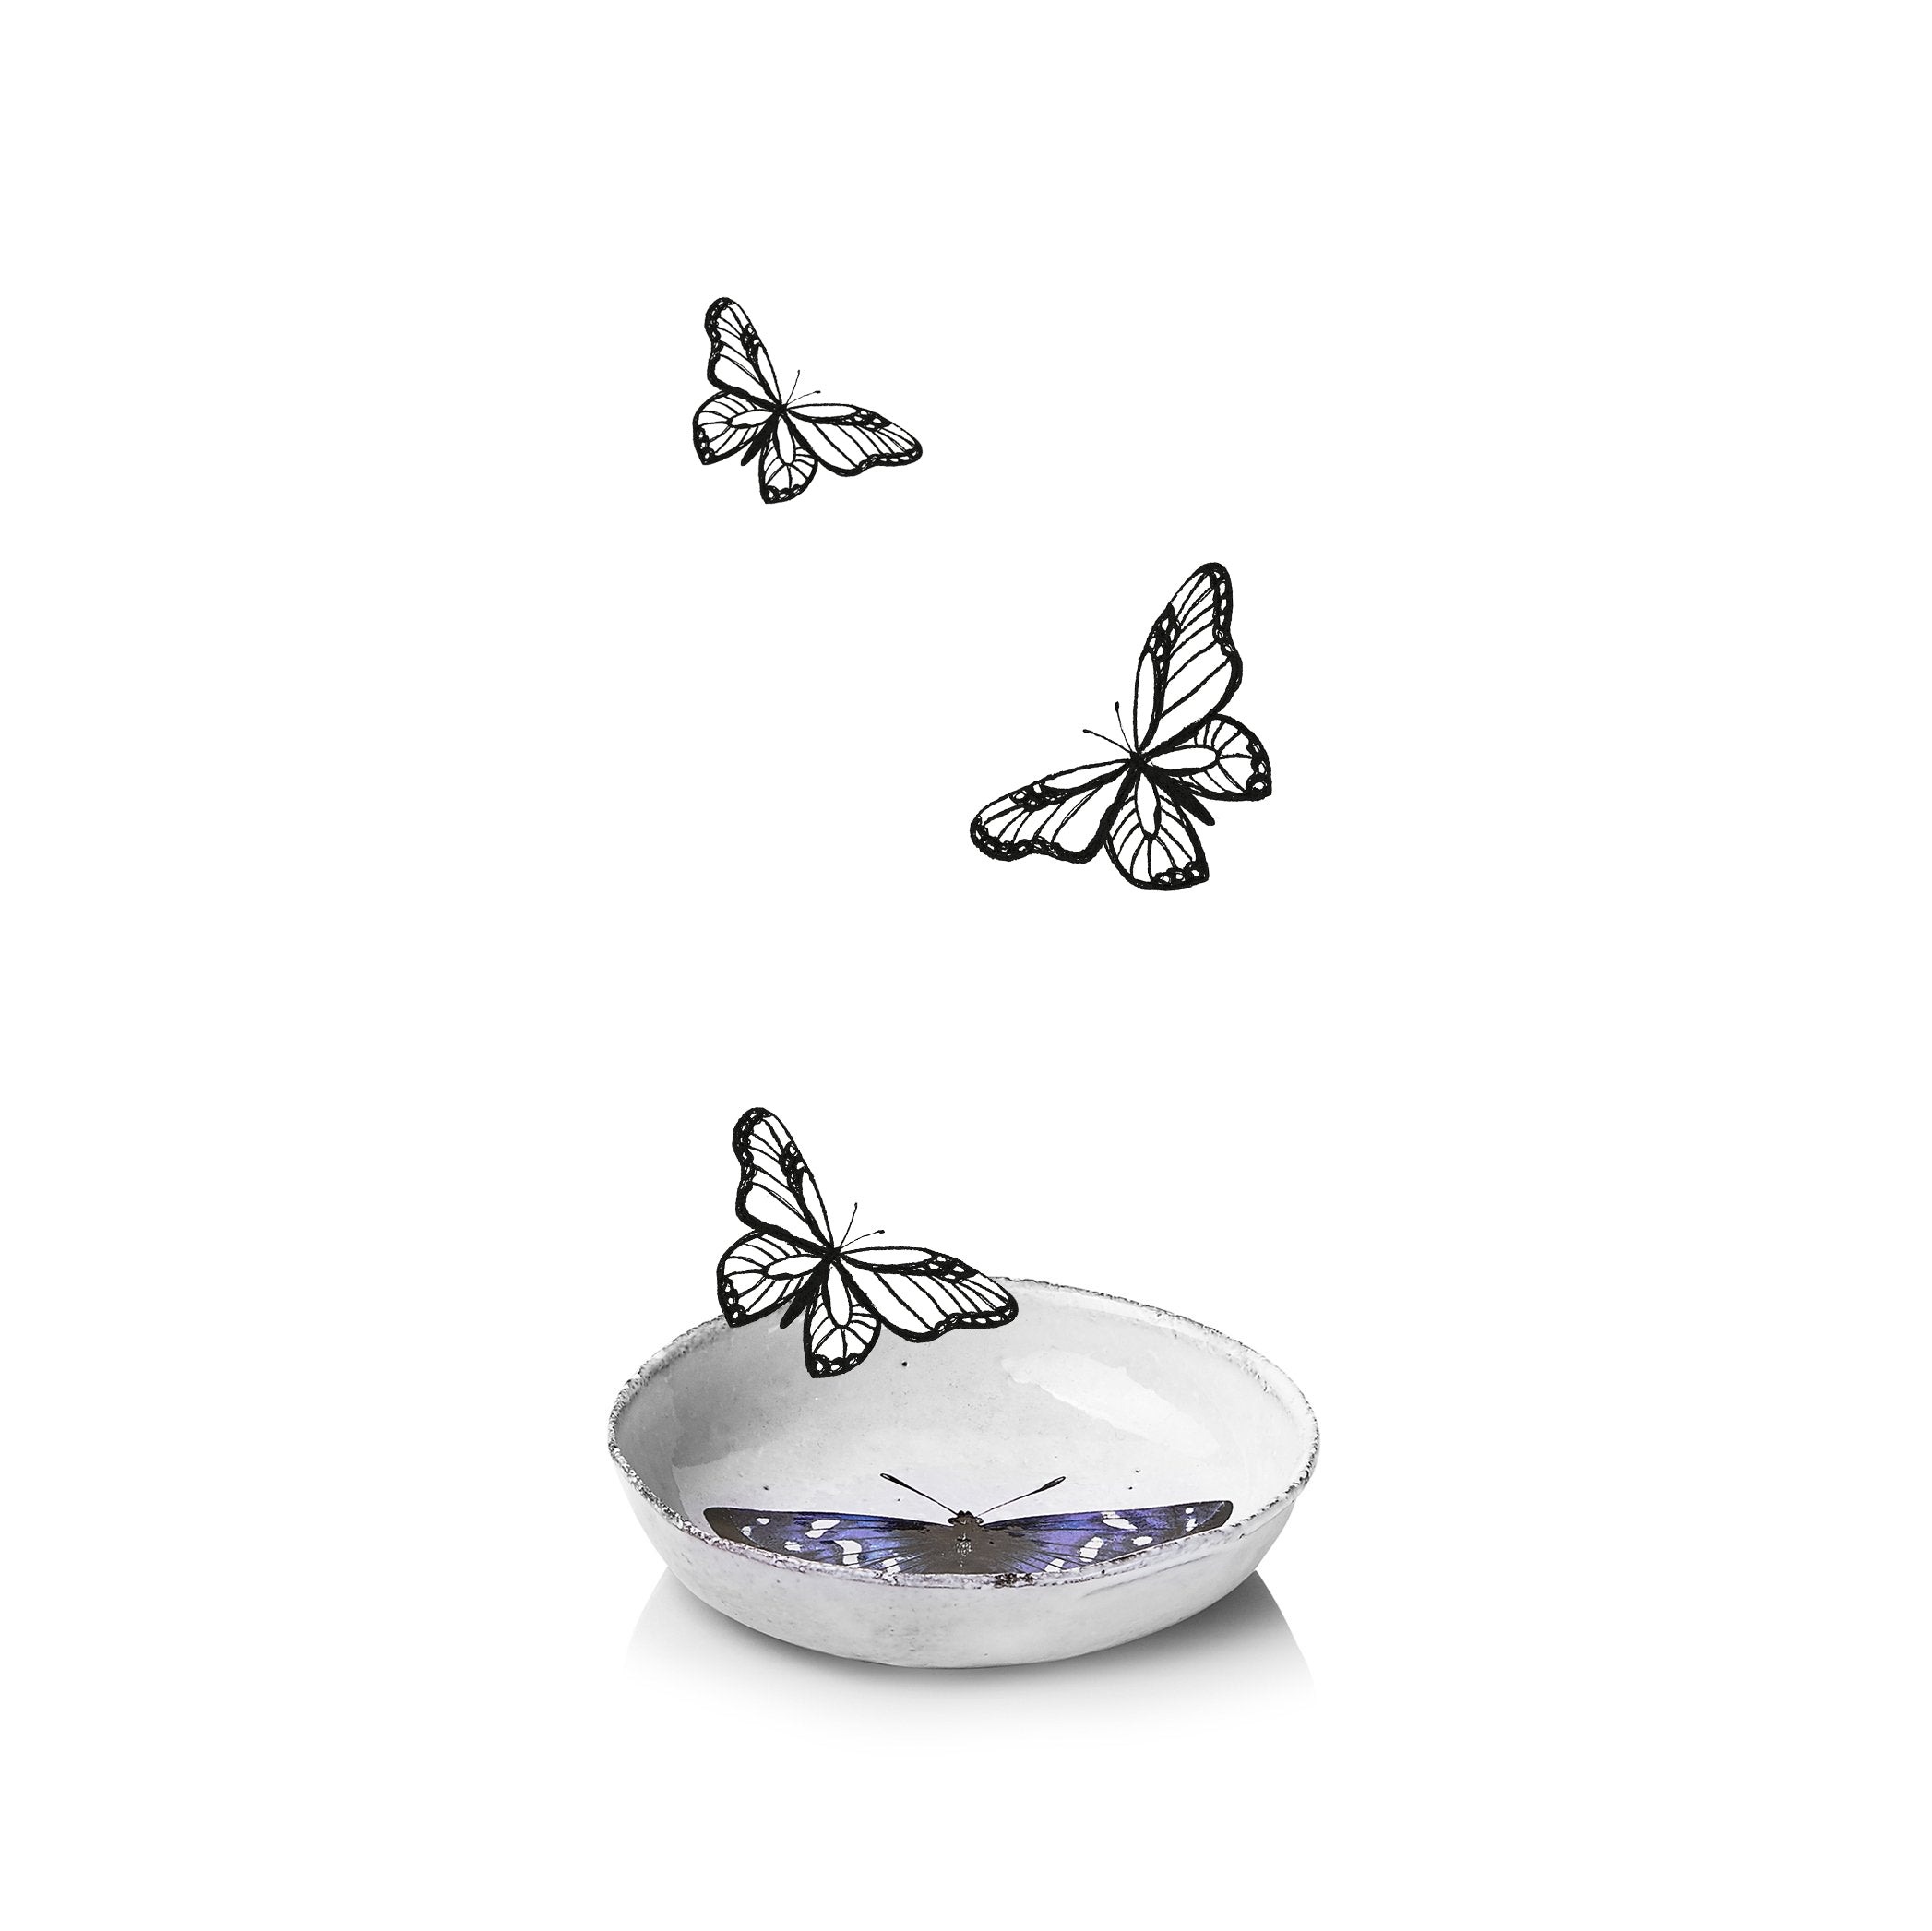 Blue Butterfly Small Dish by Astier de Villatte, 9.2 cm